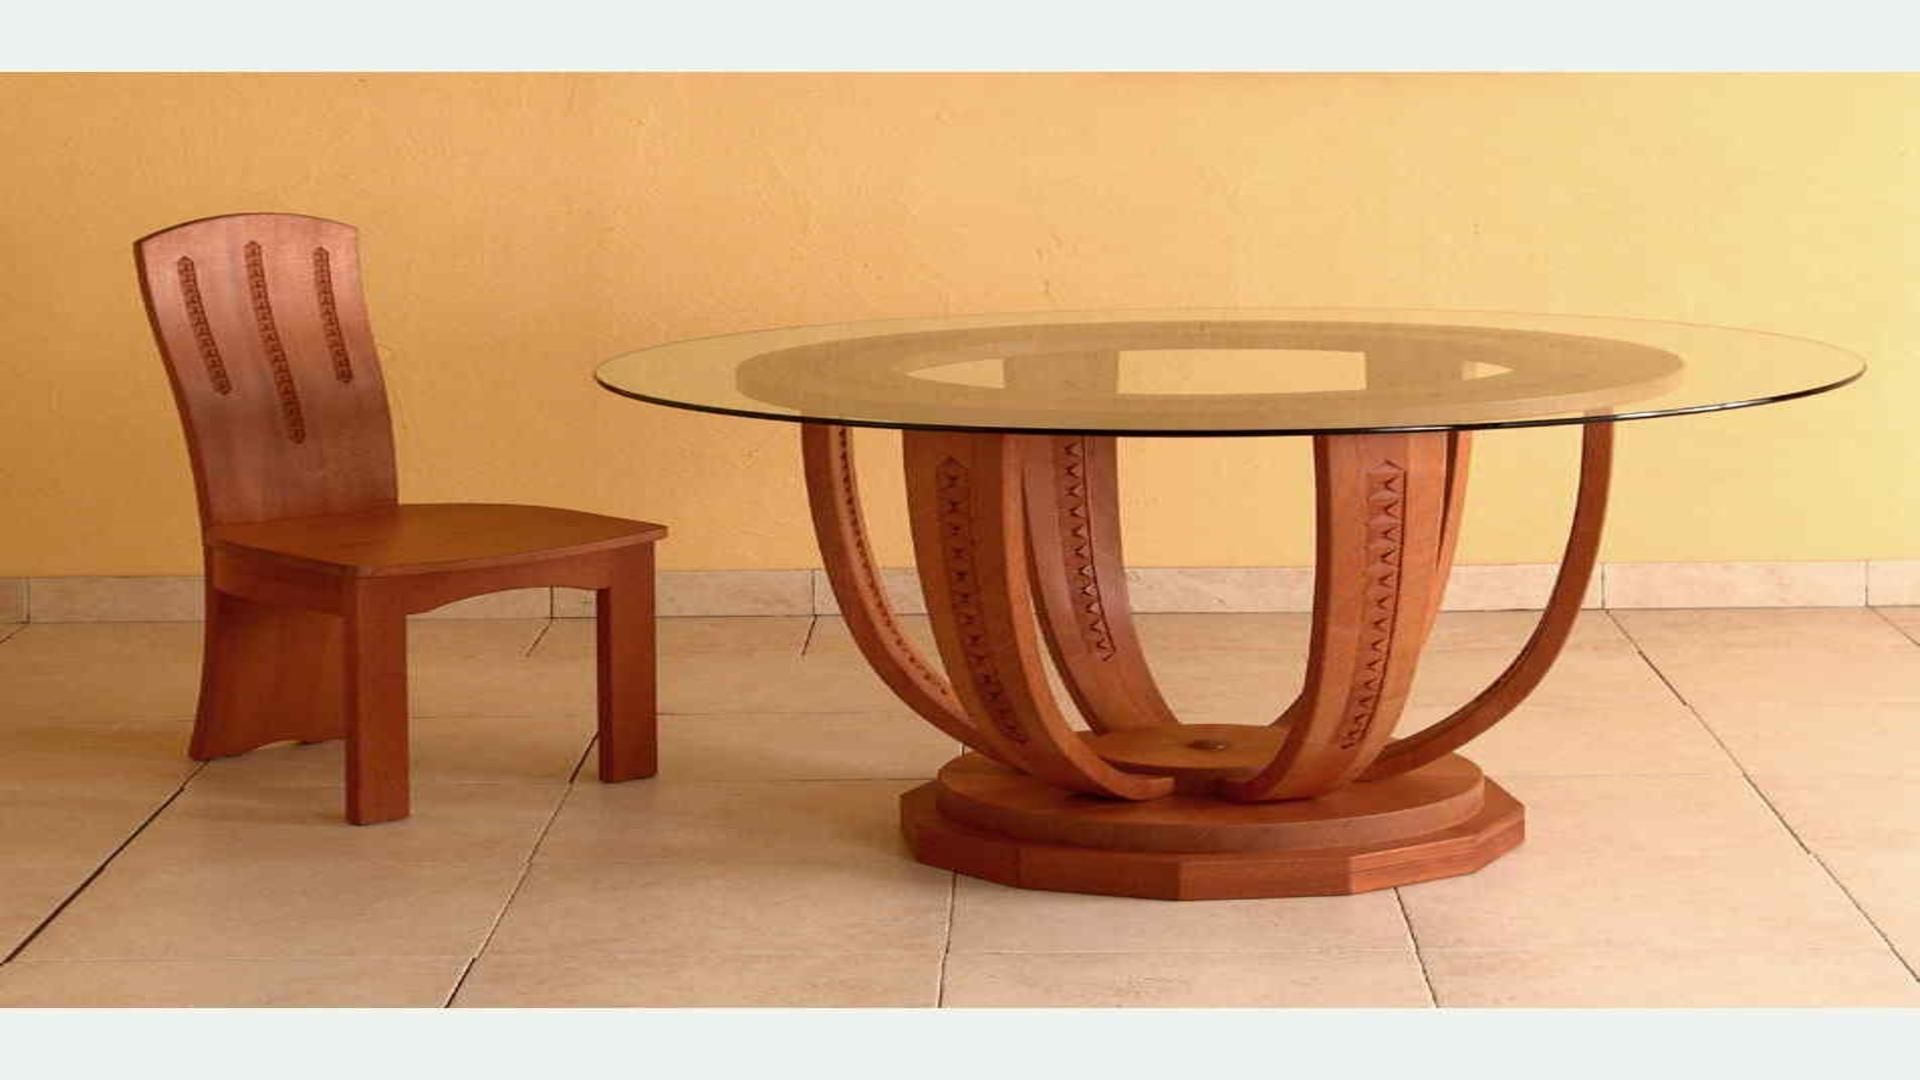 Solid mahoganny wood furniture free desktop background - free ...